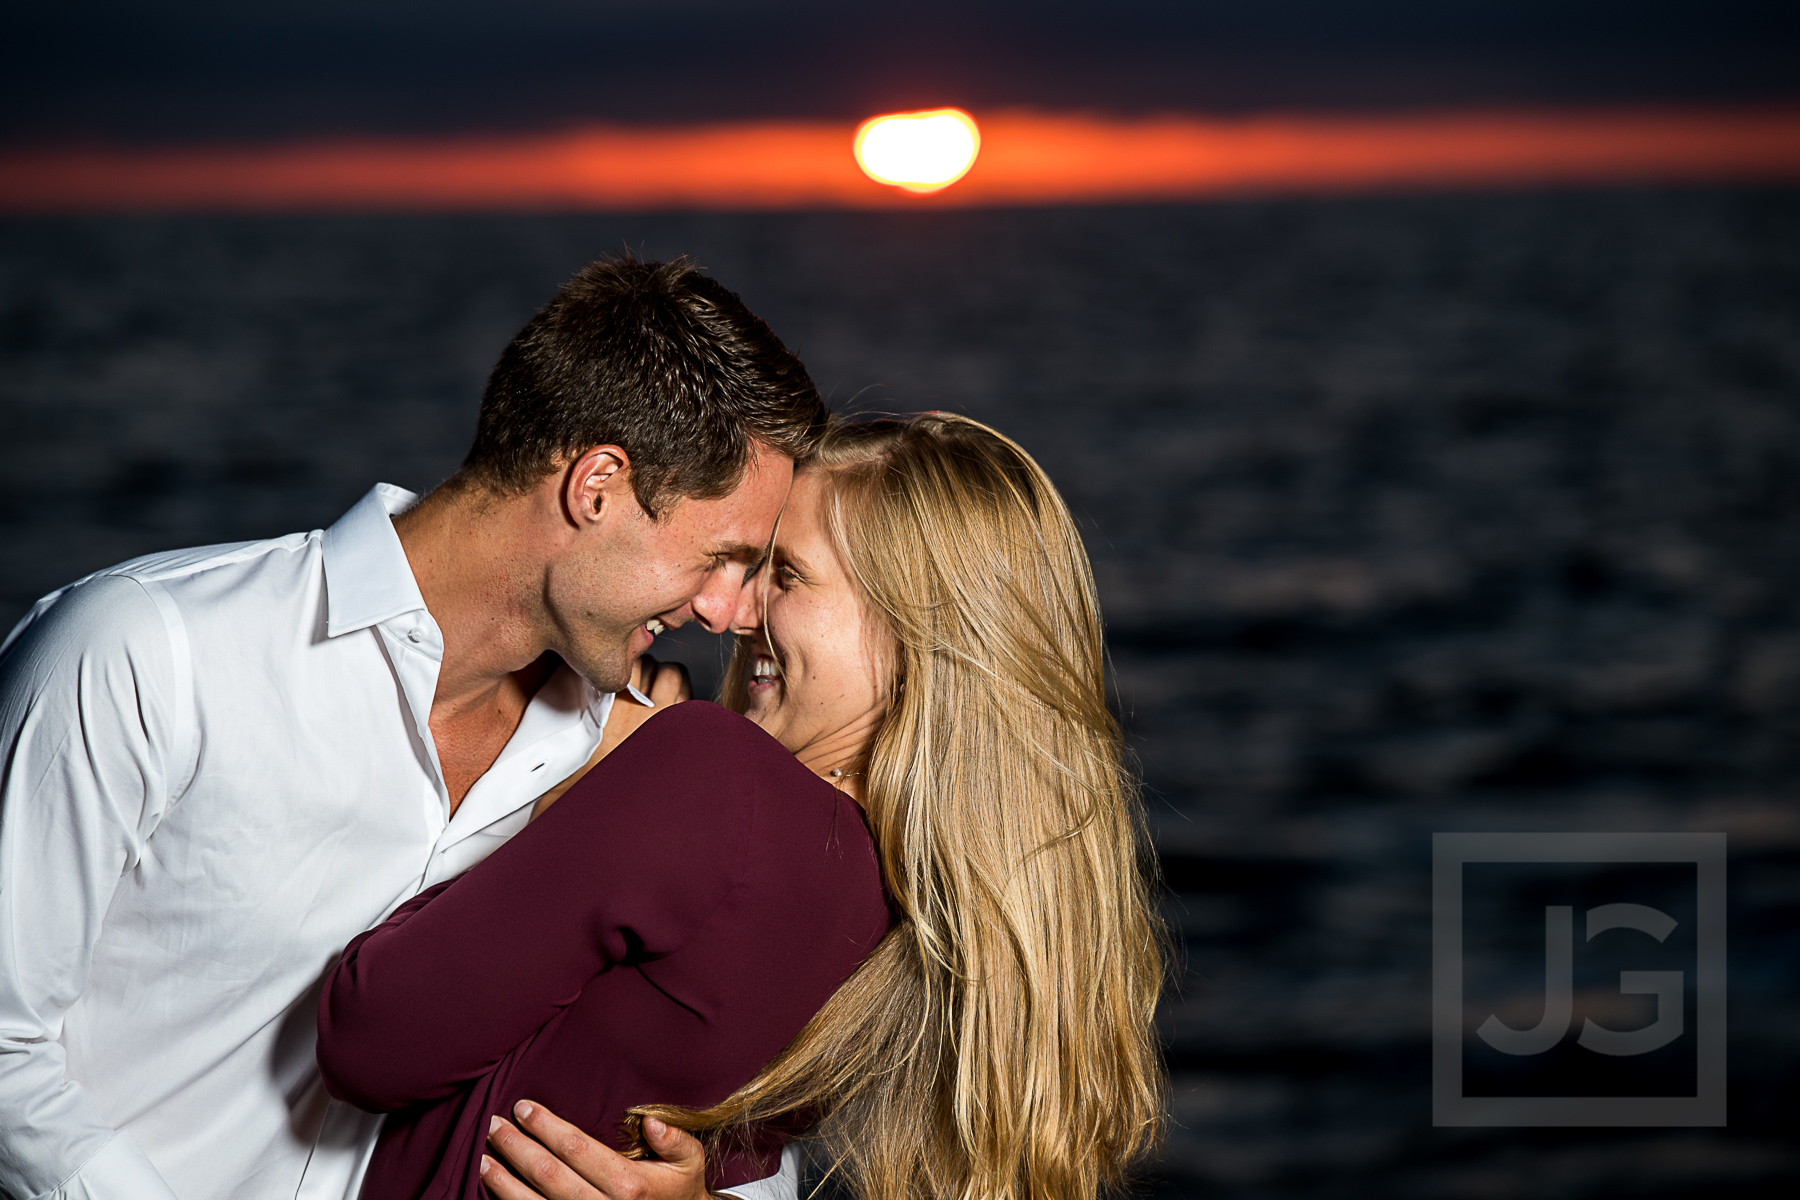  Engagement Photography Sunset Cliffs